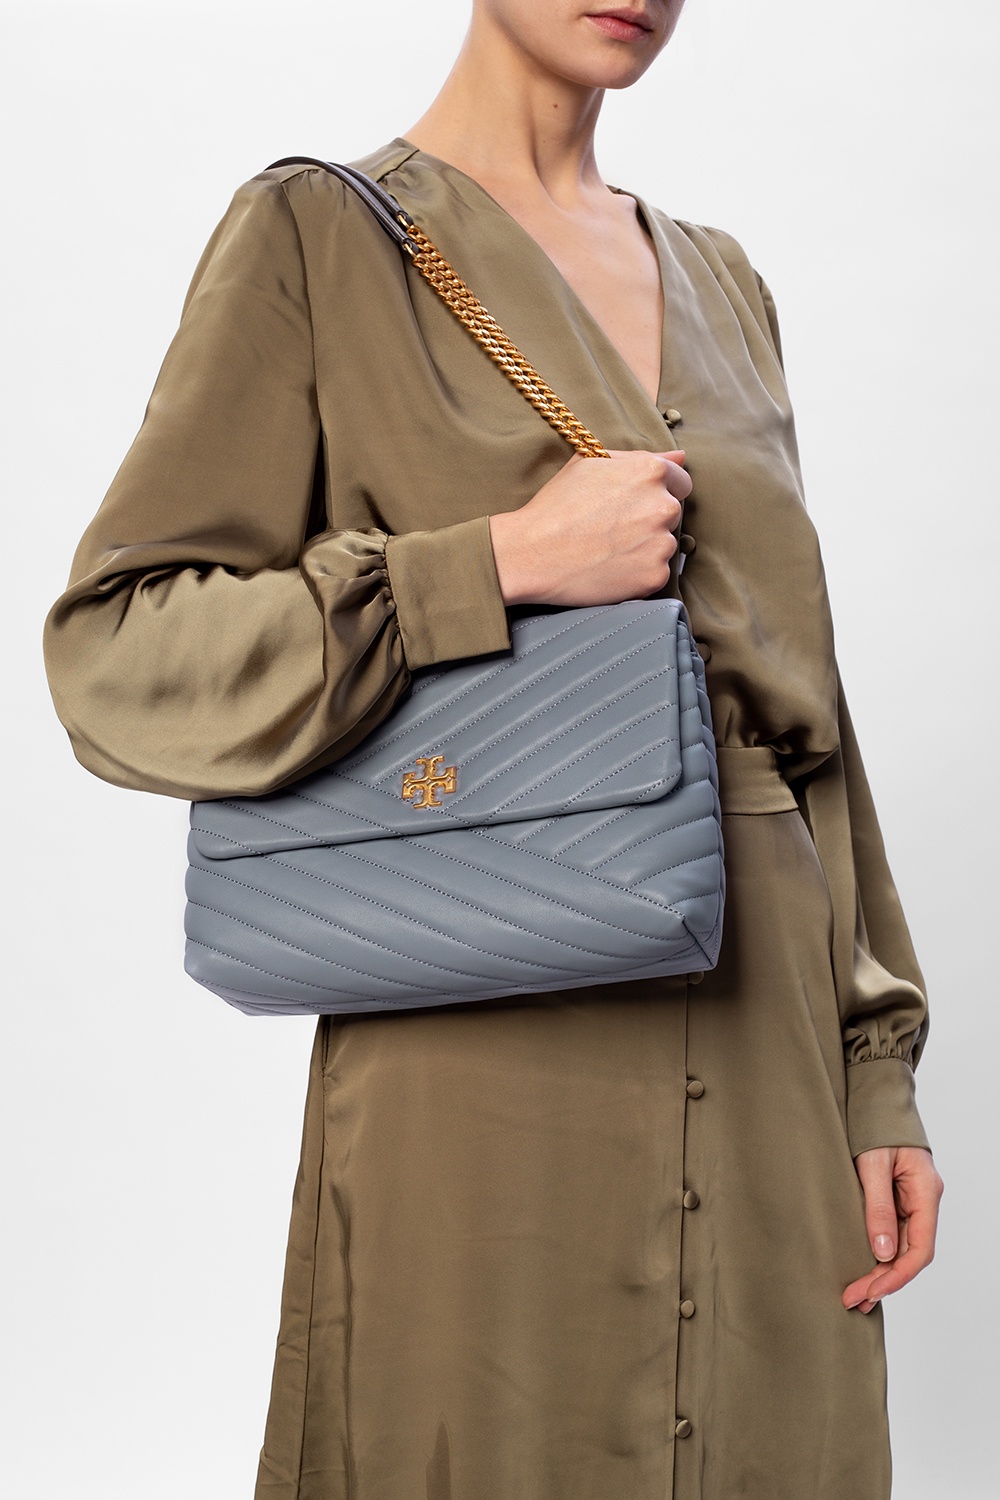 Tory Burch 'Kira' quilted shoulder bag, Women's Bags